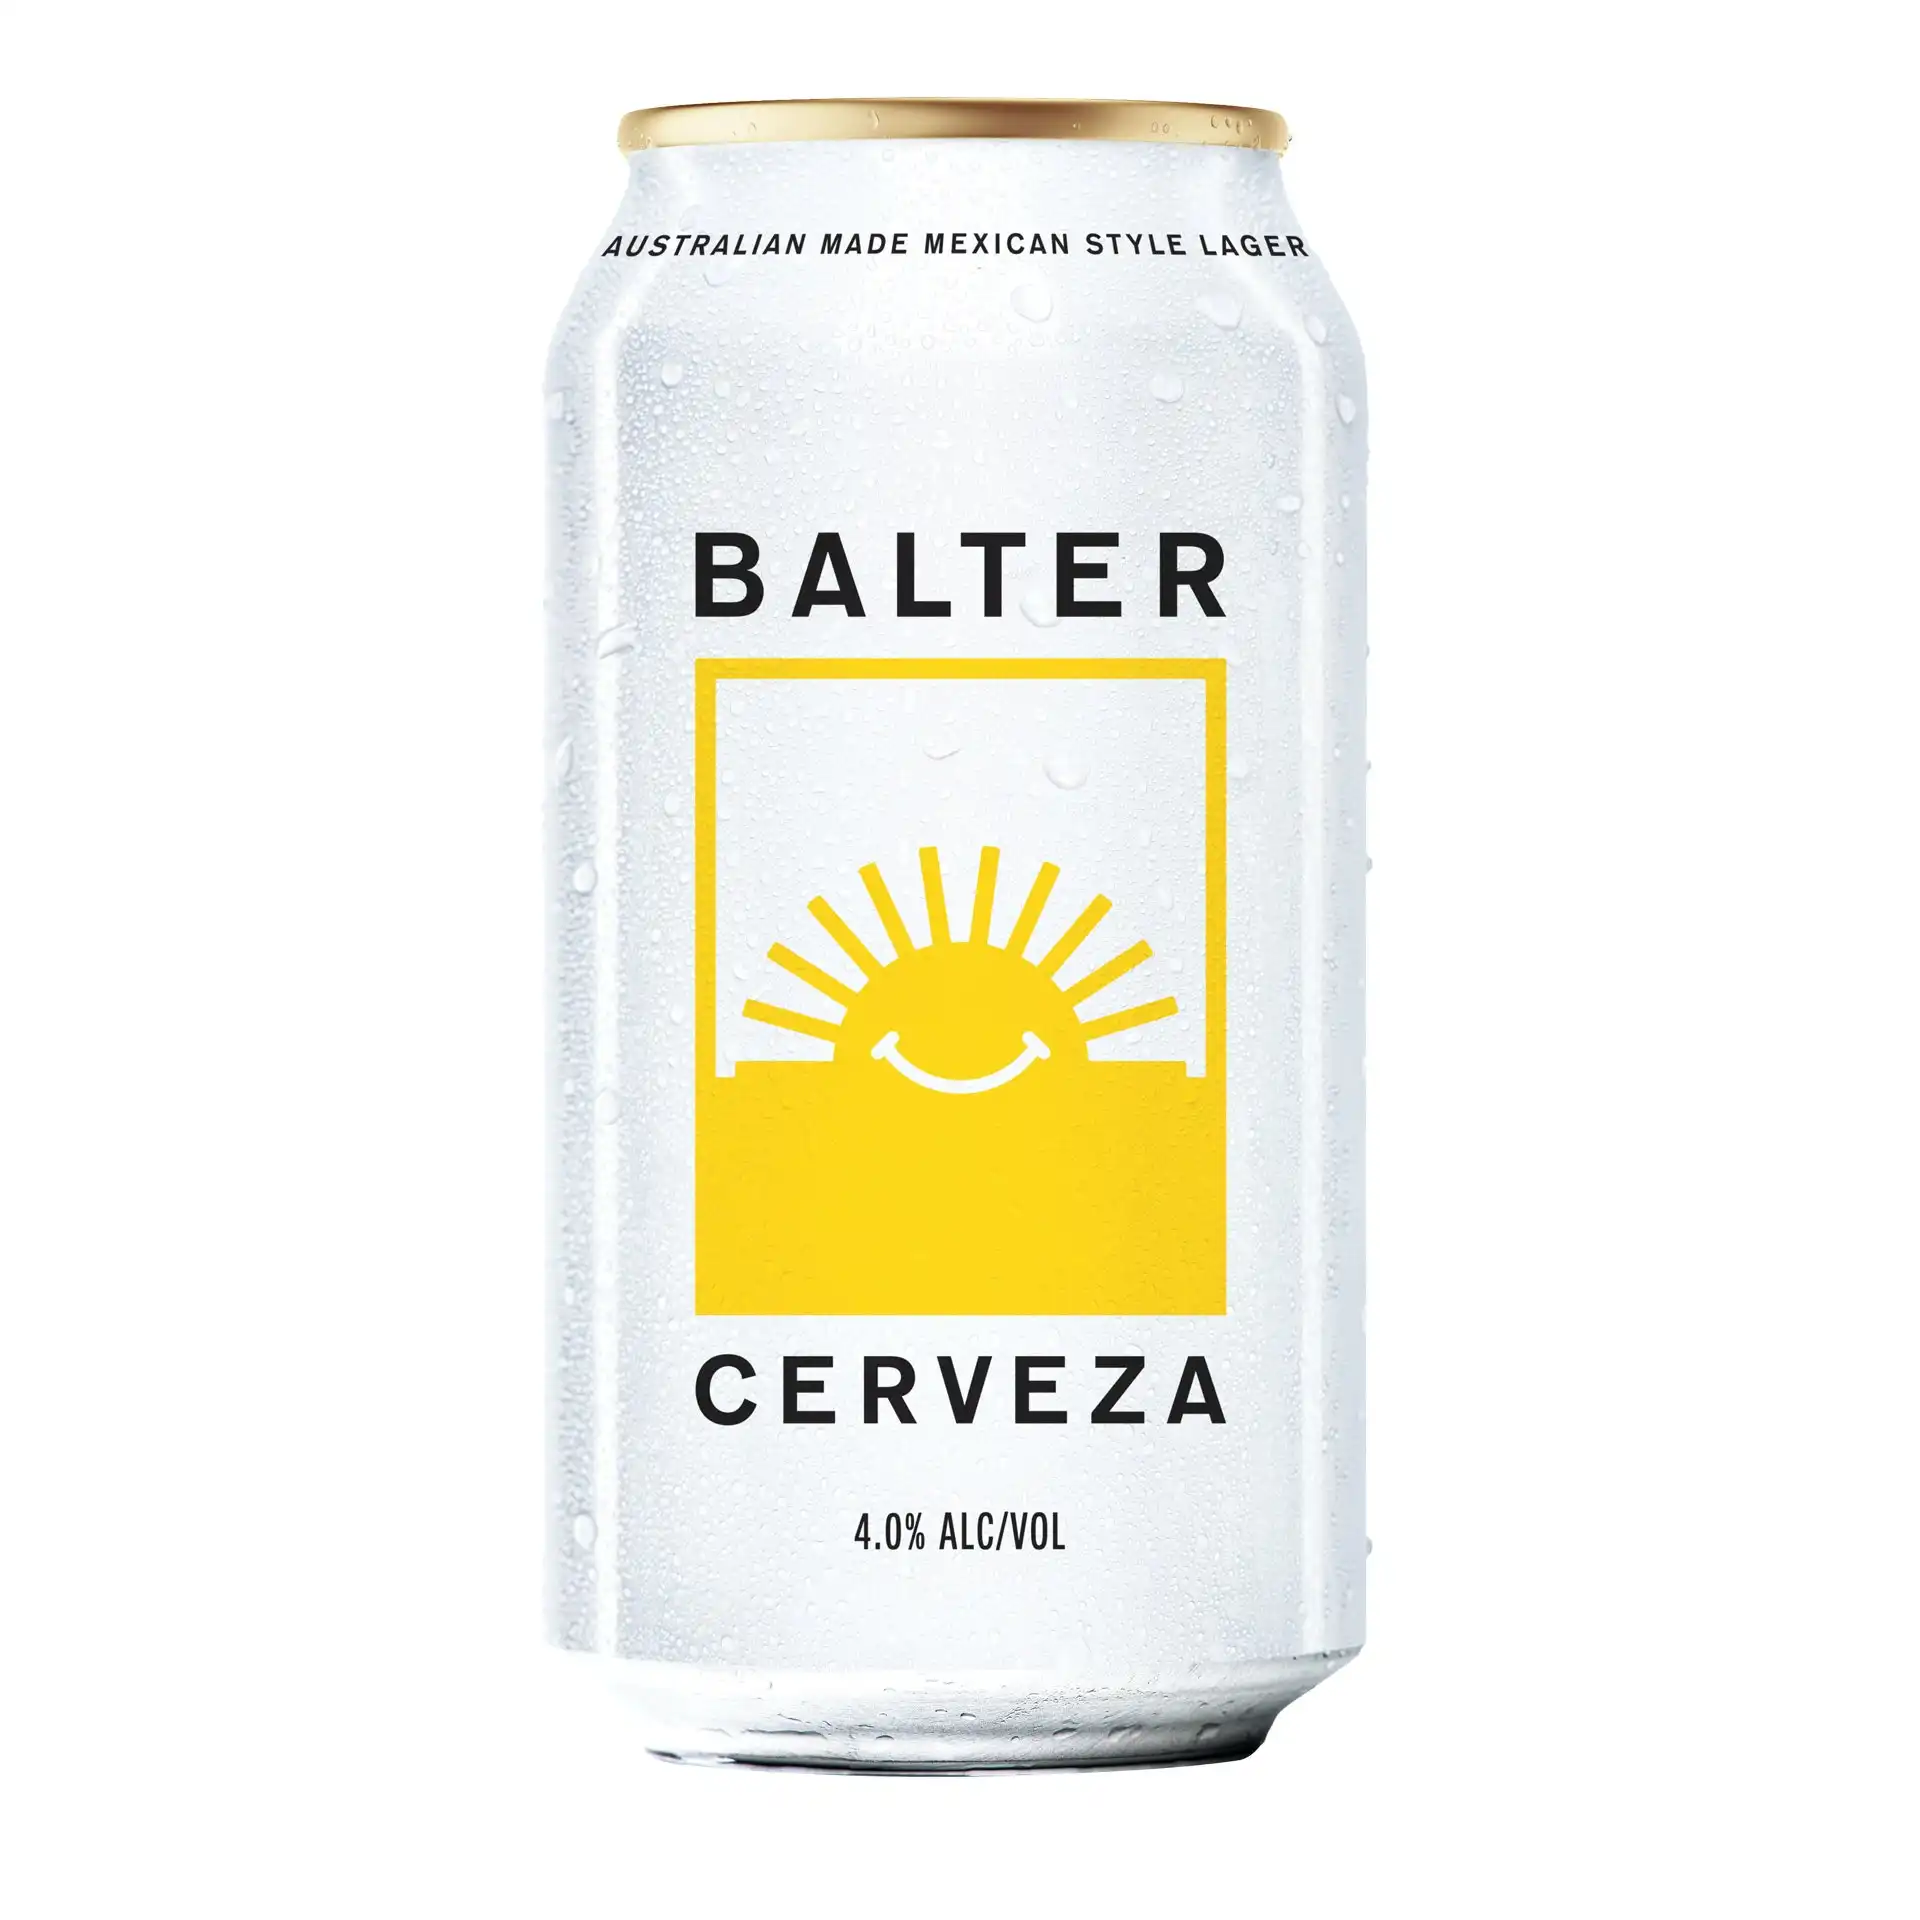 Balter Cerveza 24 x 375mL Cans